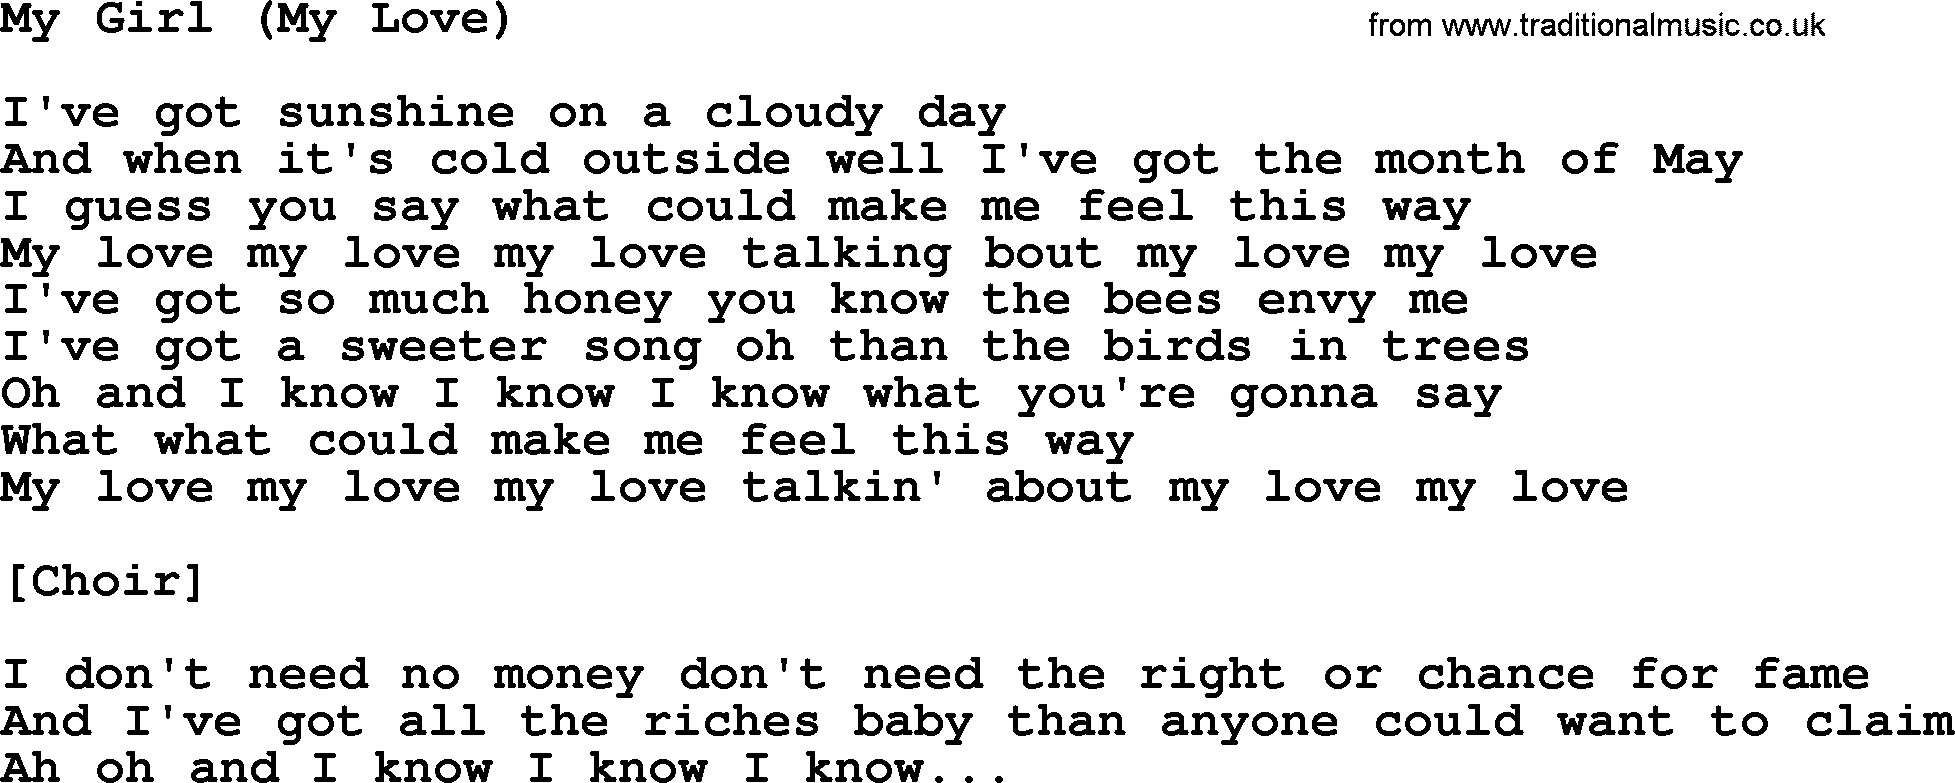 Dolly Parton song My Girl (My Love).txt lyrics